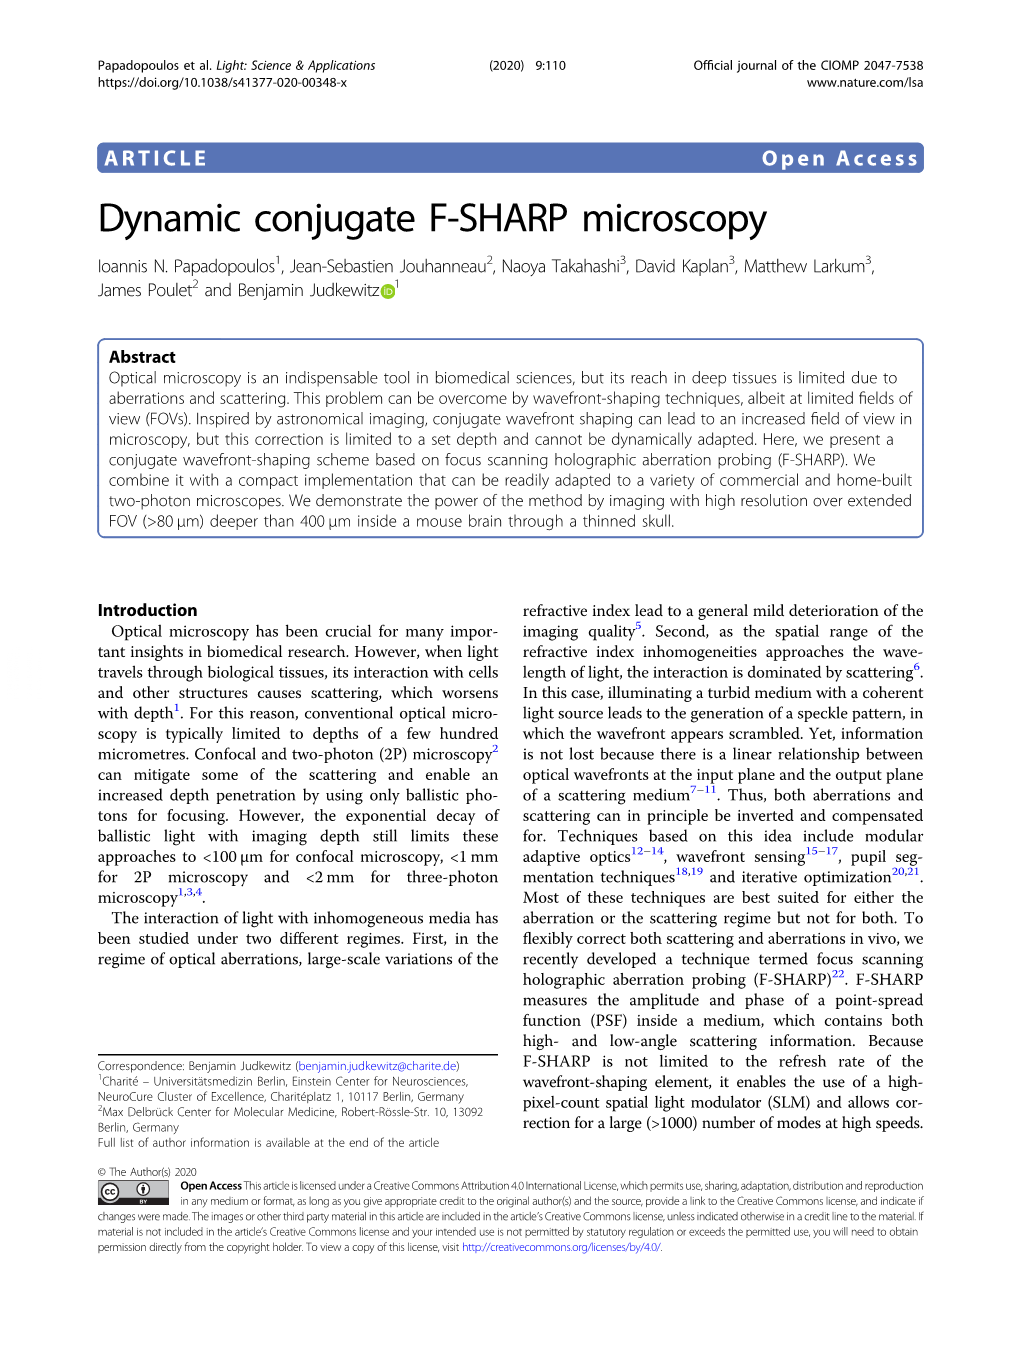 Dynamic Conjugate F-SHARP Microscopy Ioannis N